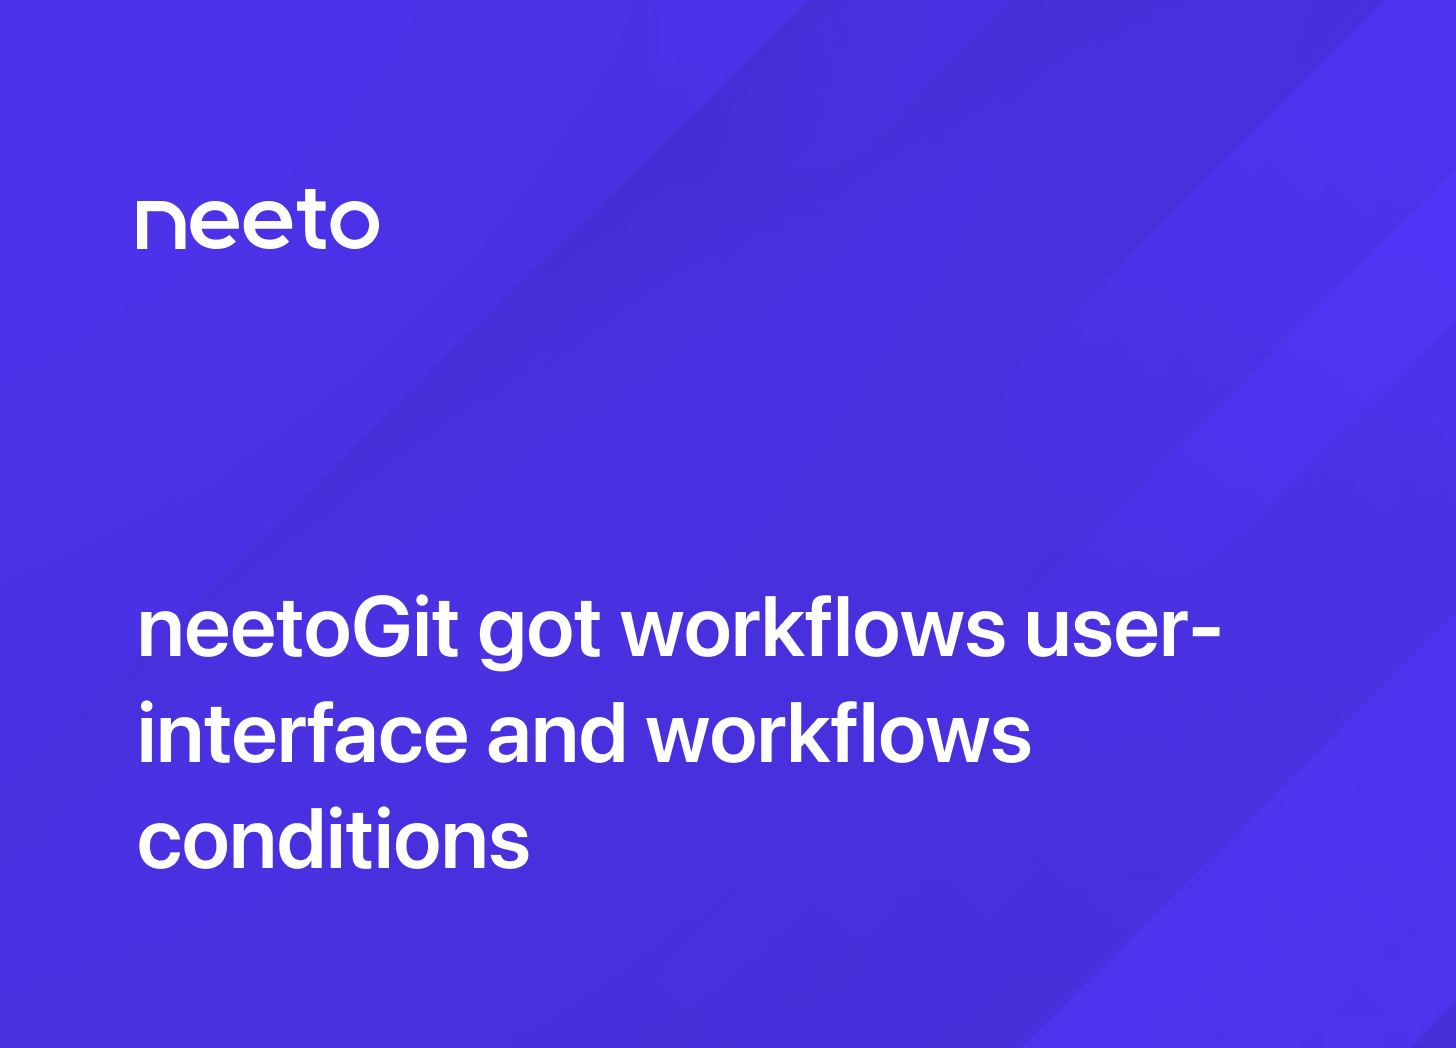 neetogit got workflows user interface